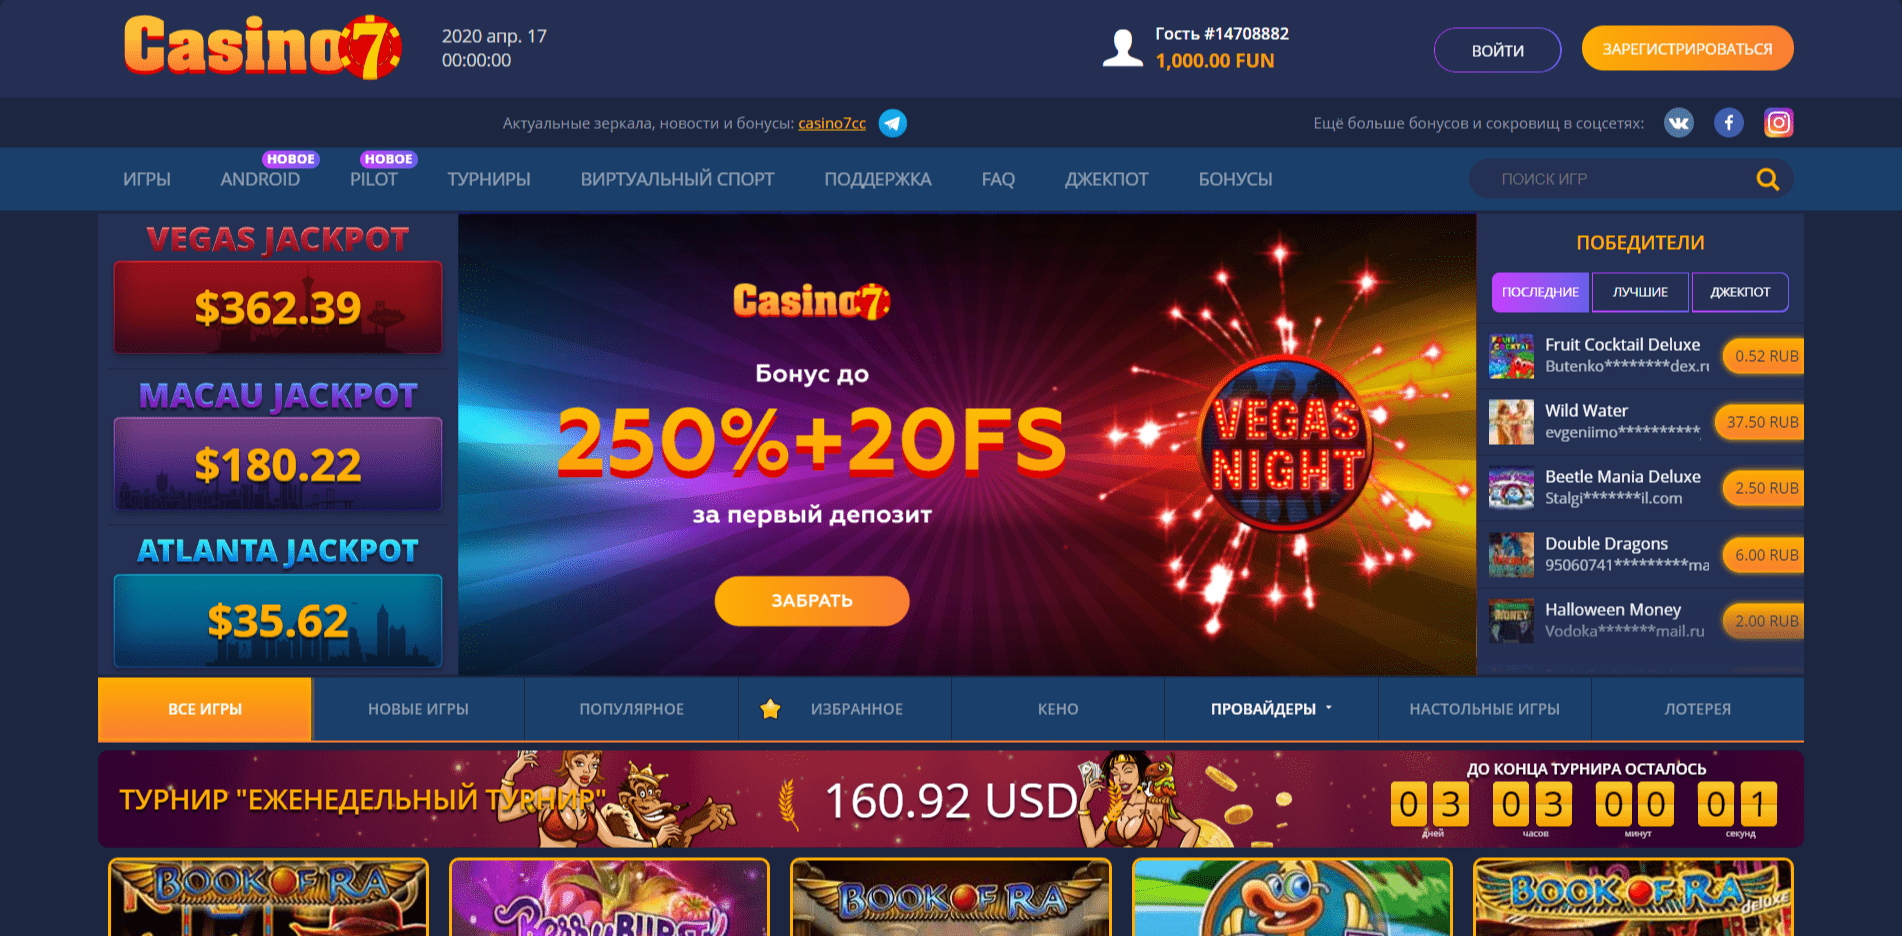 casino7 промокод на бездепозитный бонус